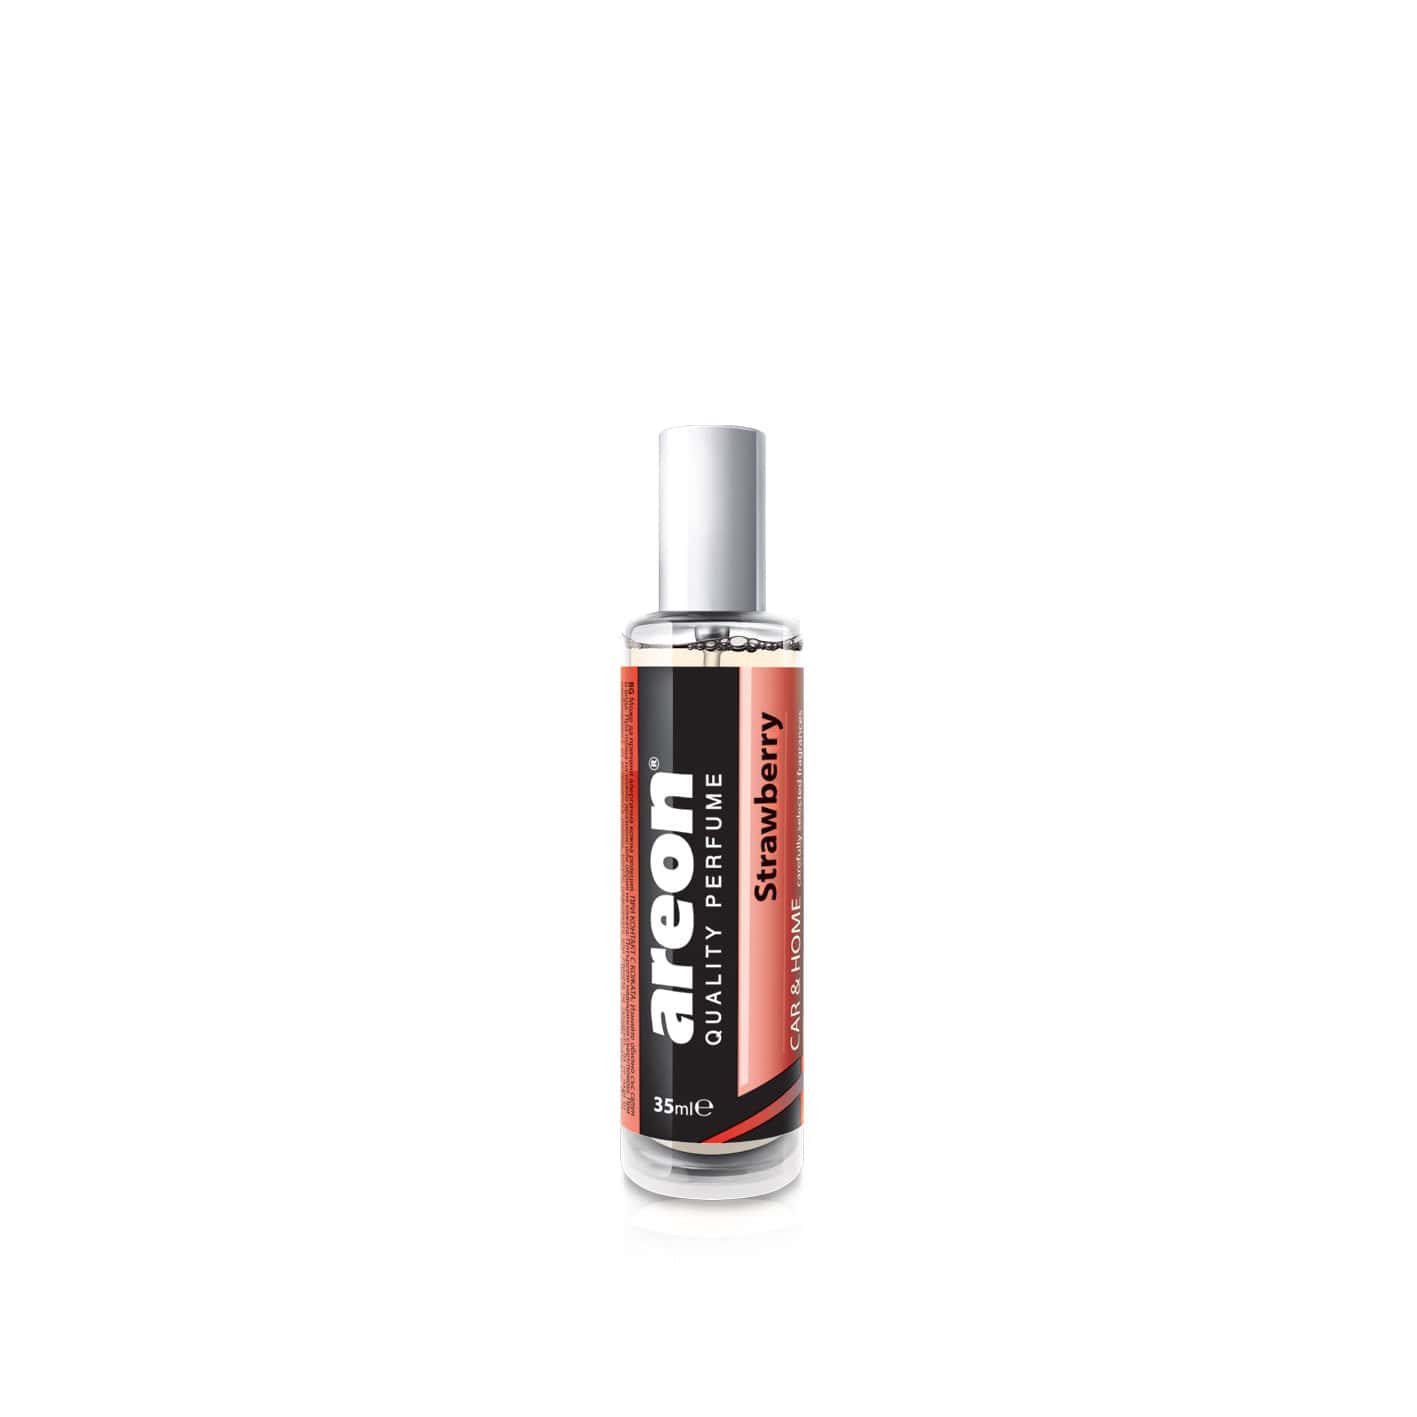 Areon spray perfume 35 ml ( strawberry scent )